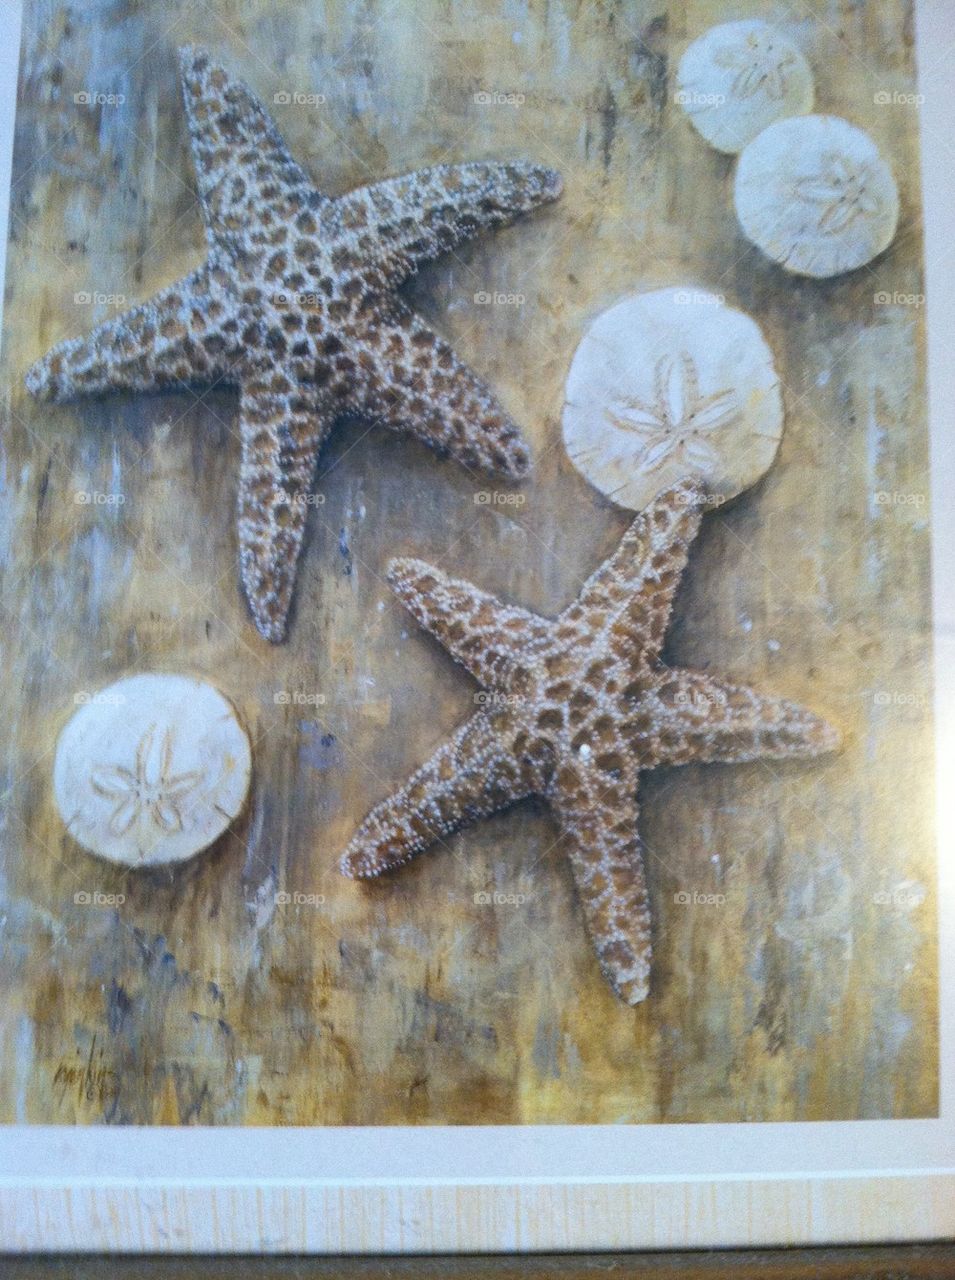 Starfish and sand dollars